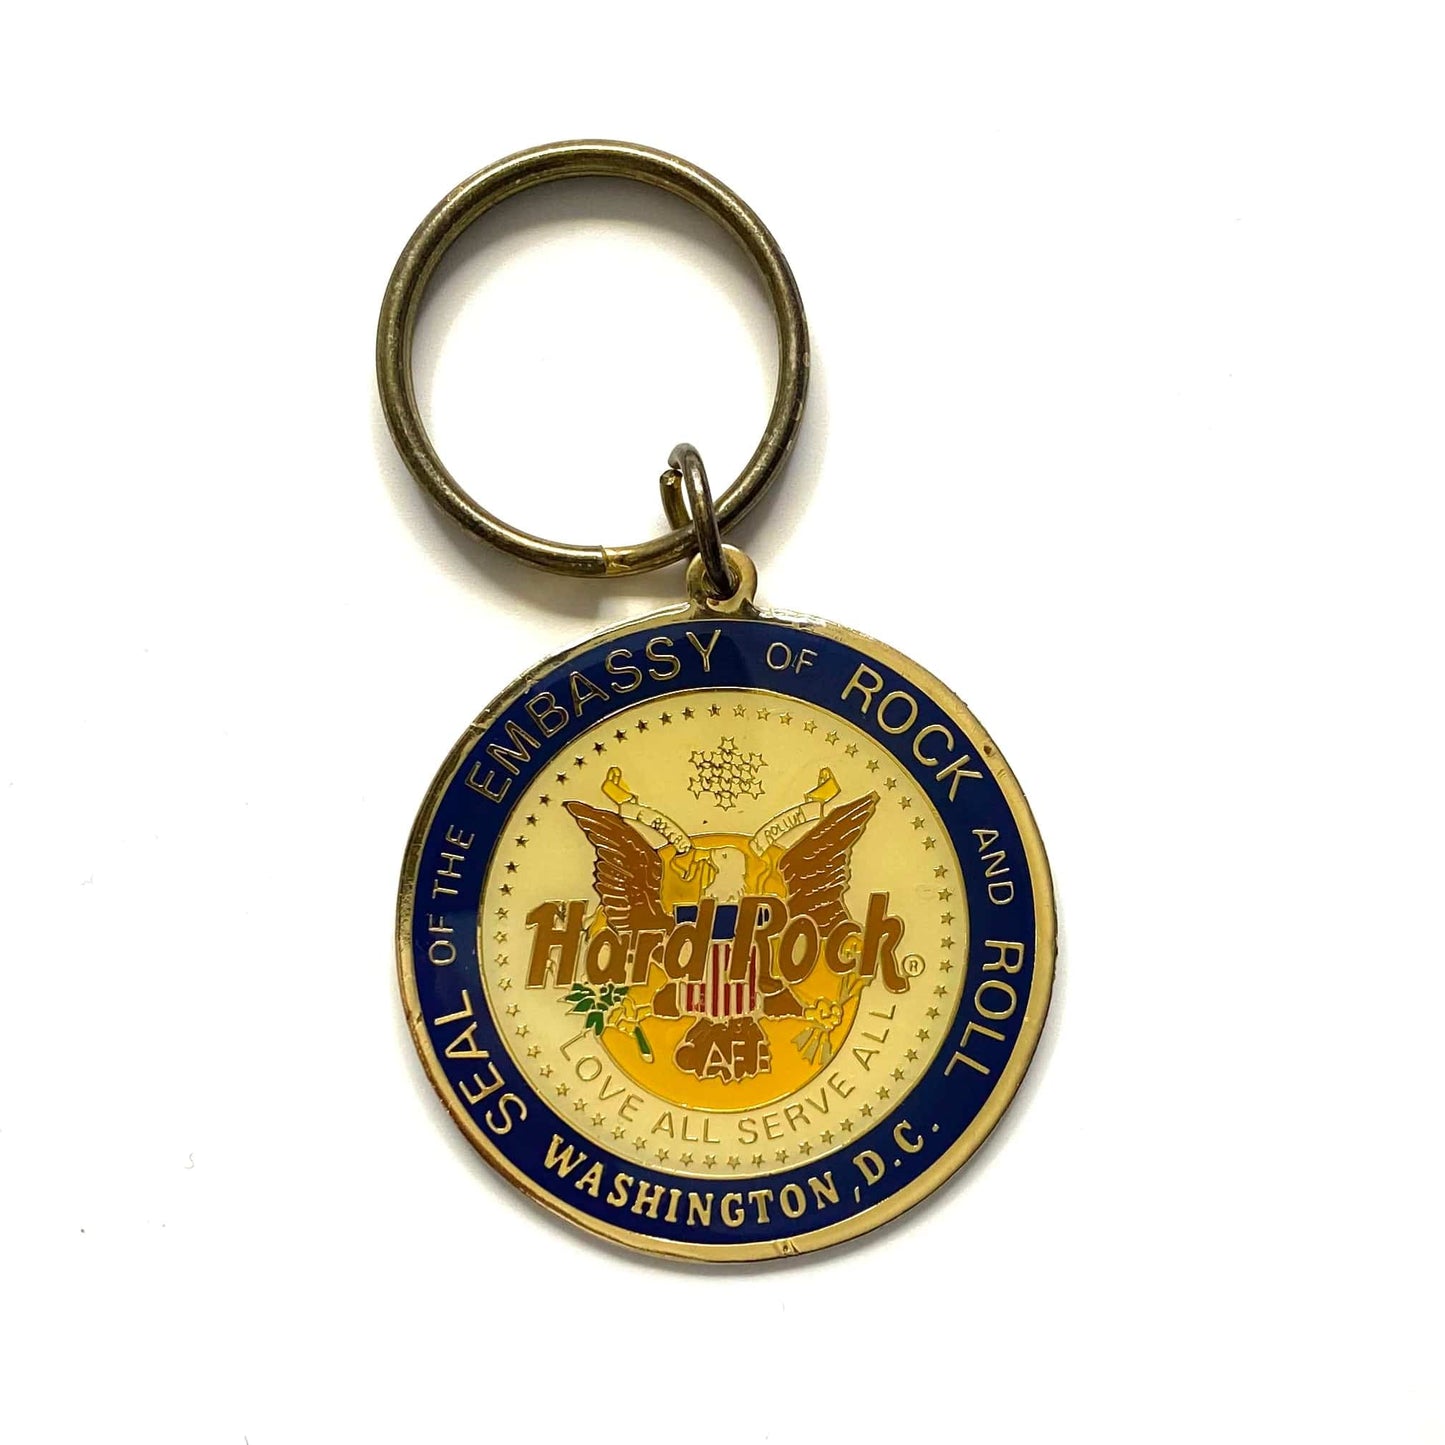 Vintage Washington, D.C. Enamel The Embassy of Rock & Roll Souvenir Keychain Key Ring Metal Round